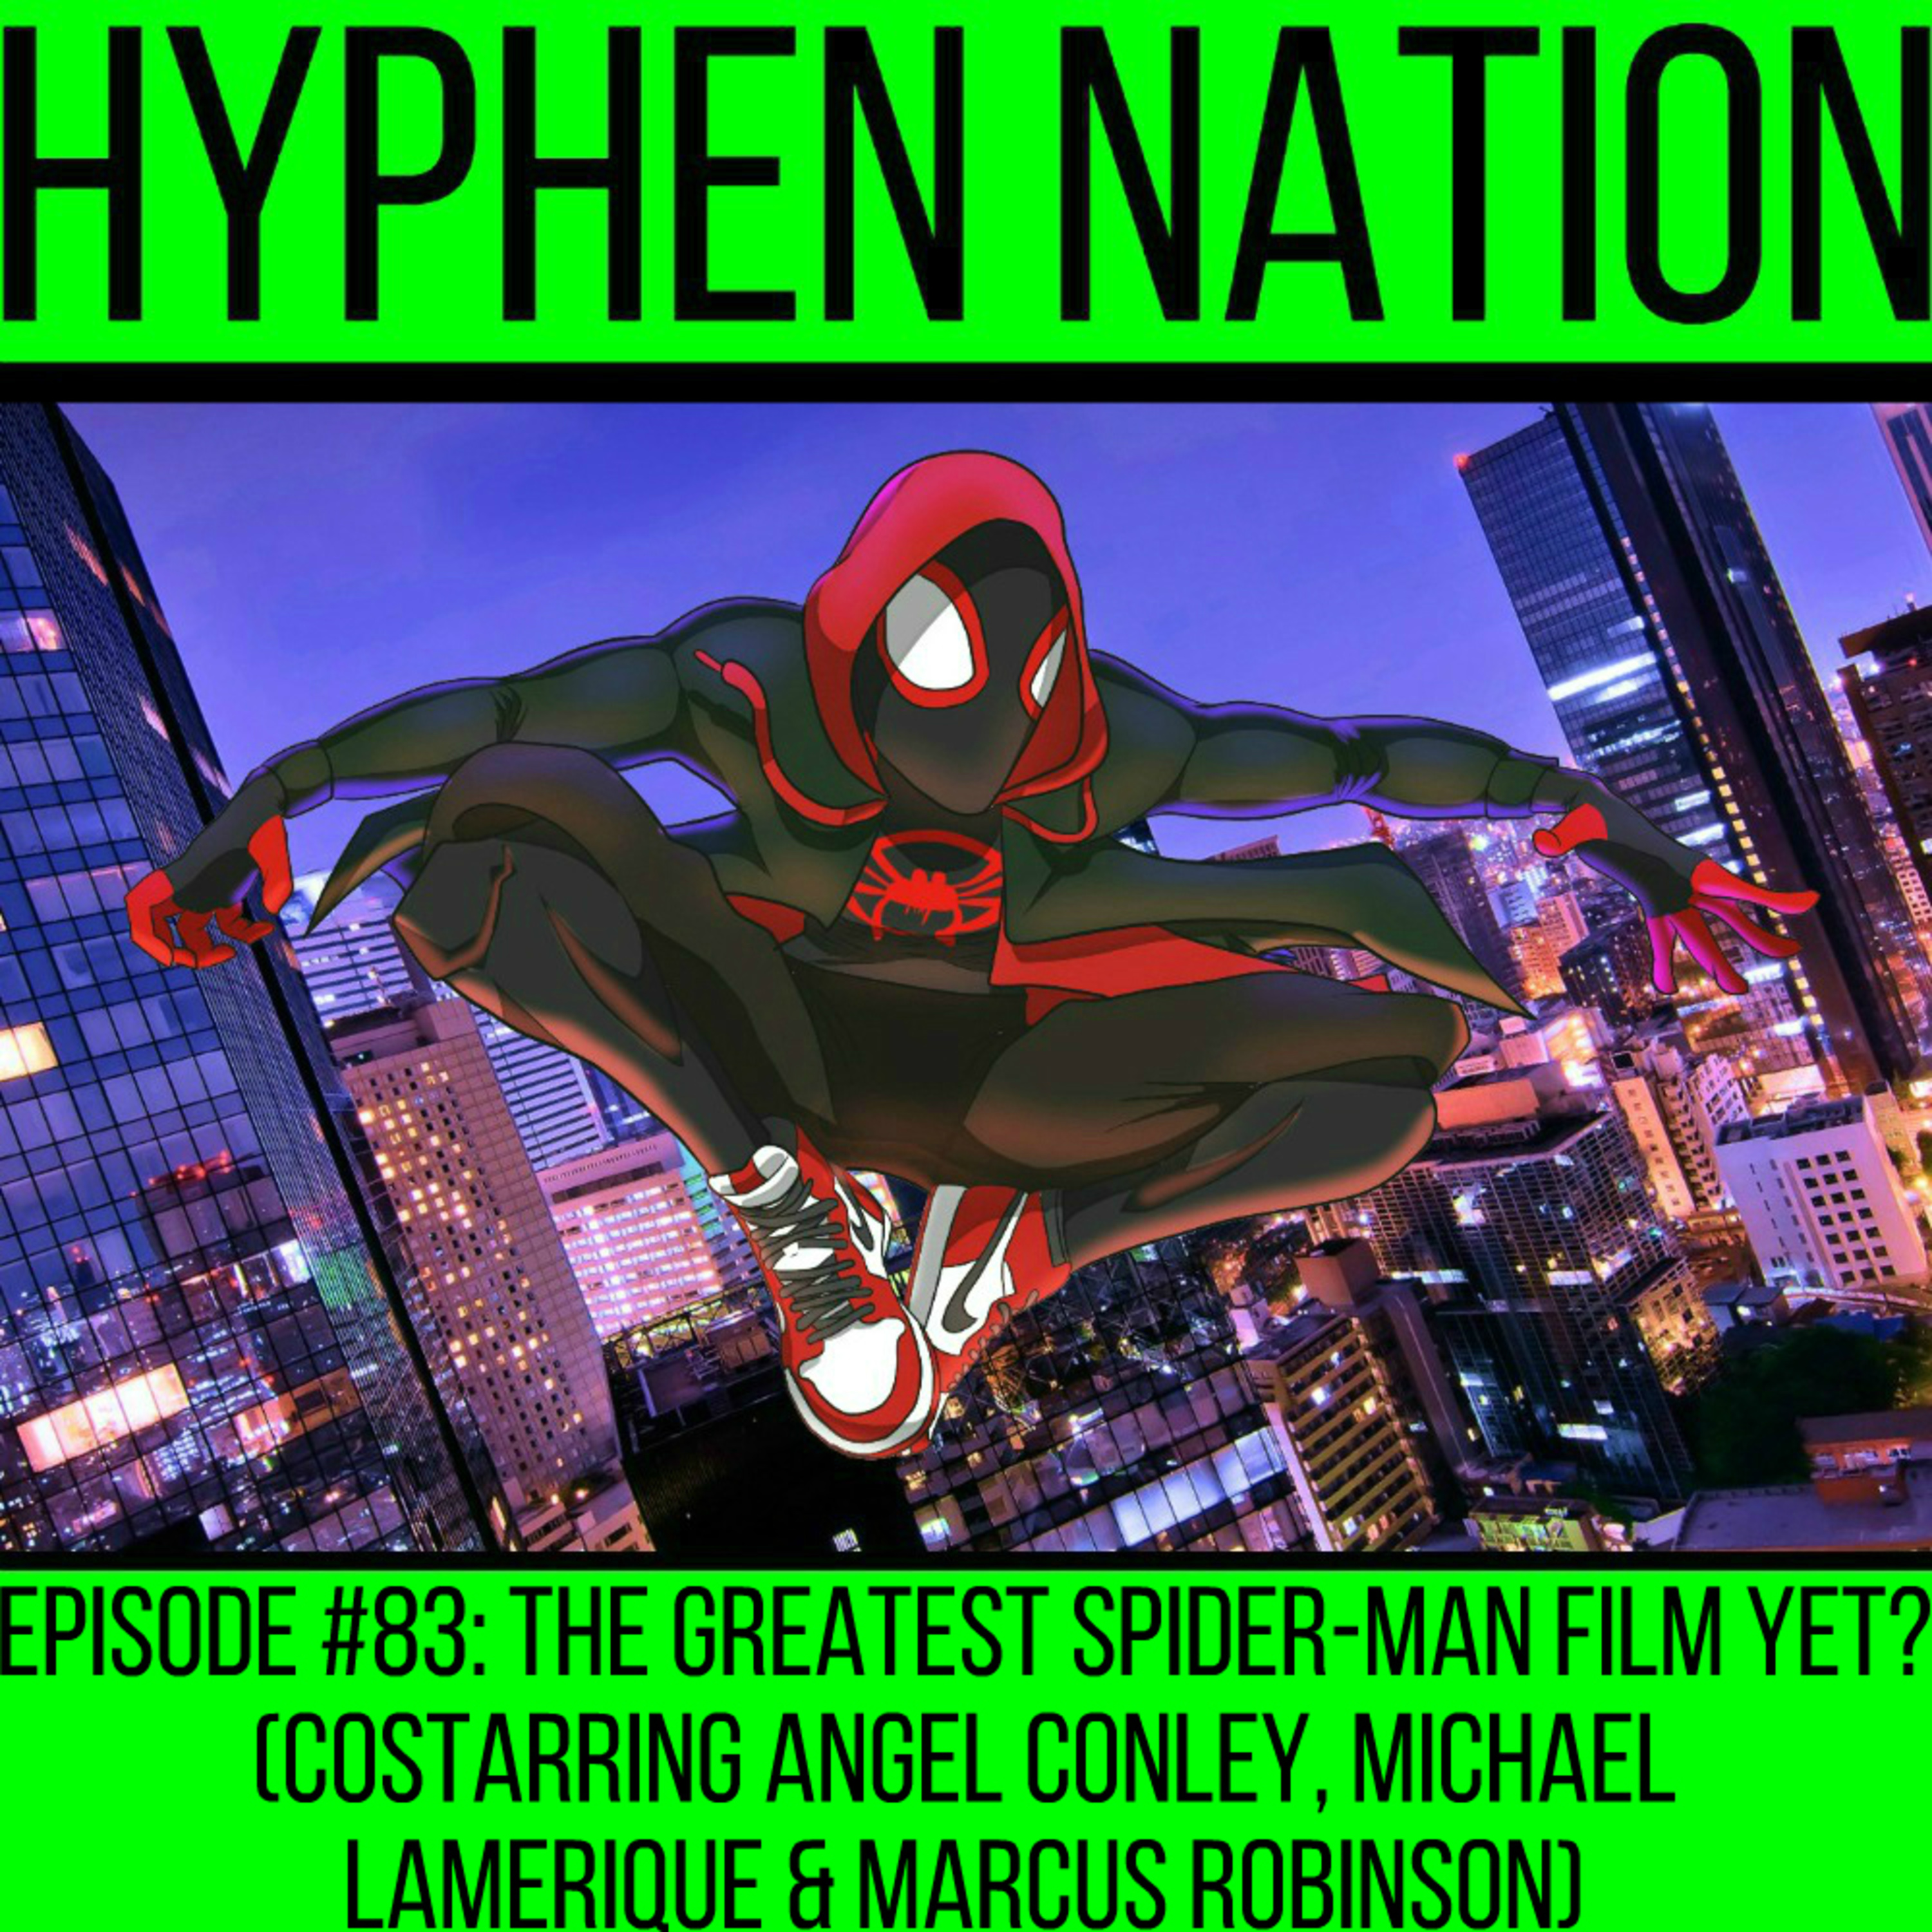 Episode #83: The Greatest Spider-Man Film Yet? (Costarring Angel Conley, Michael Lamerique & Marcus Robinson)